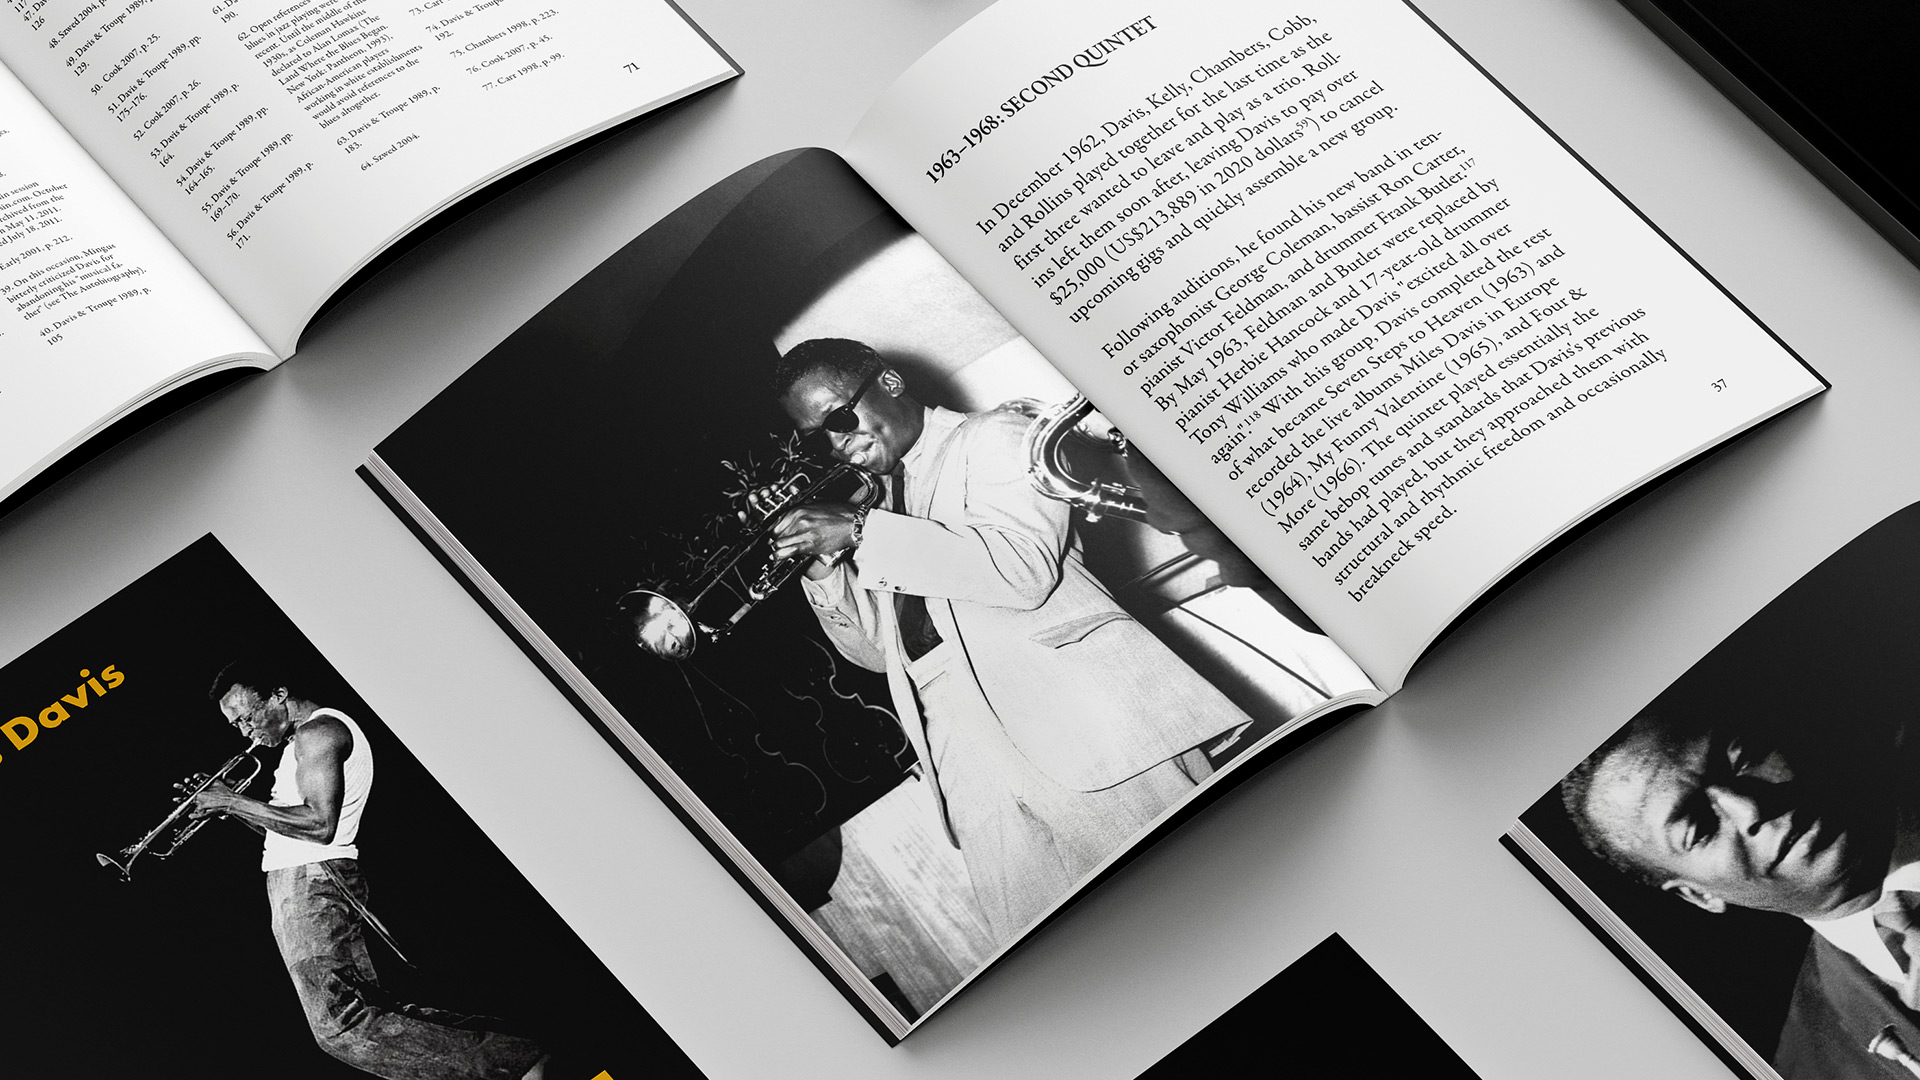 Miles Davis Book